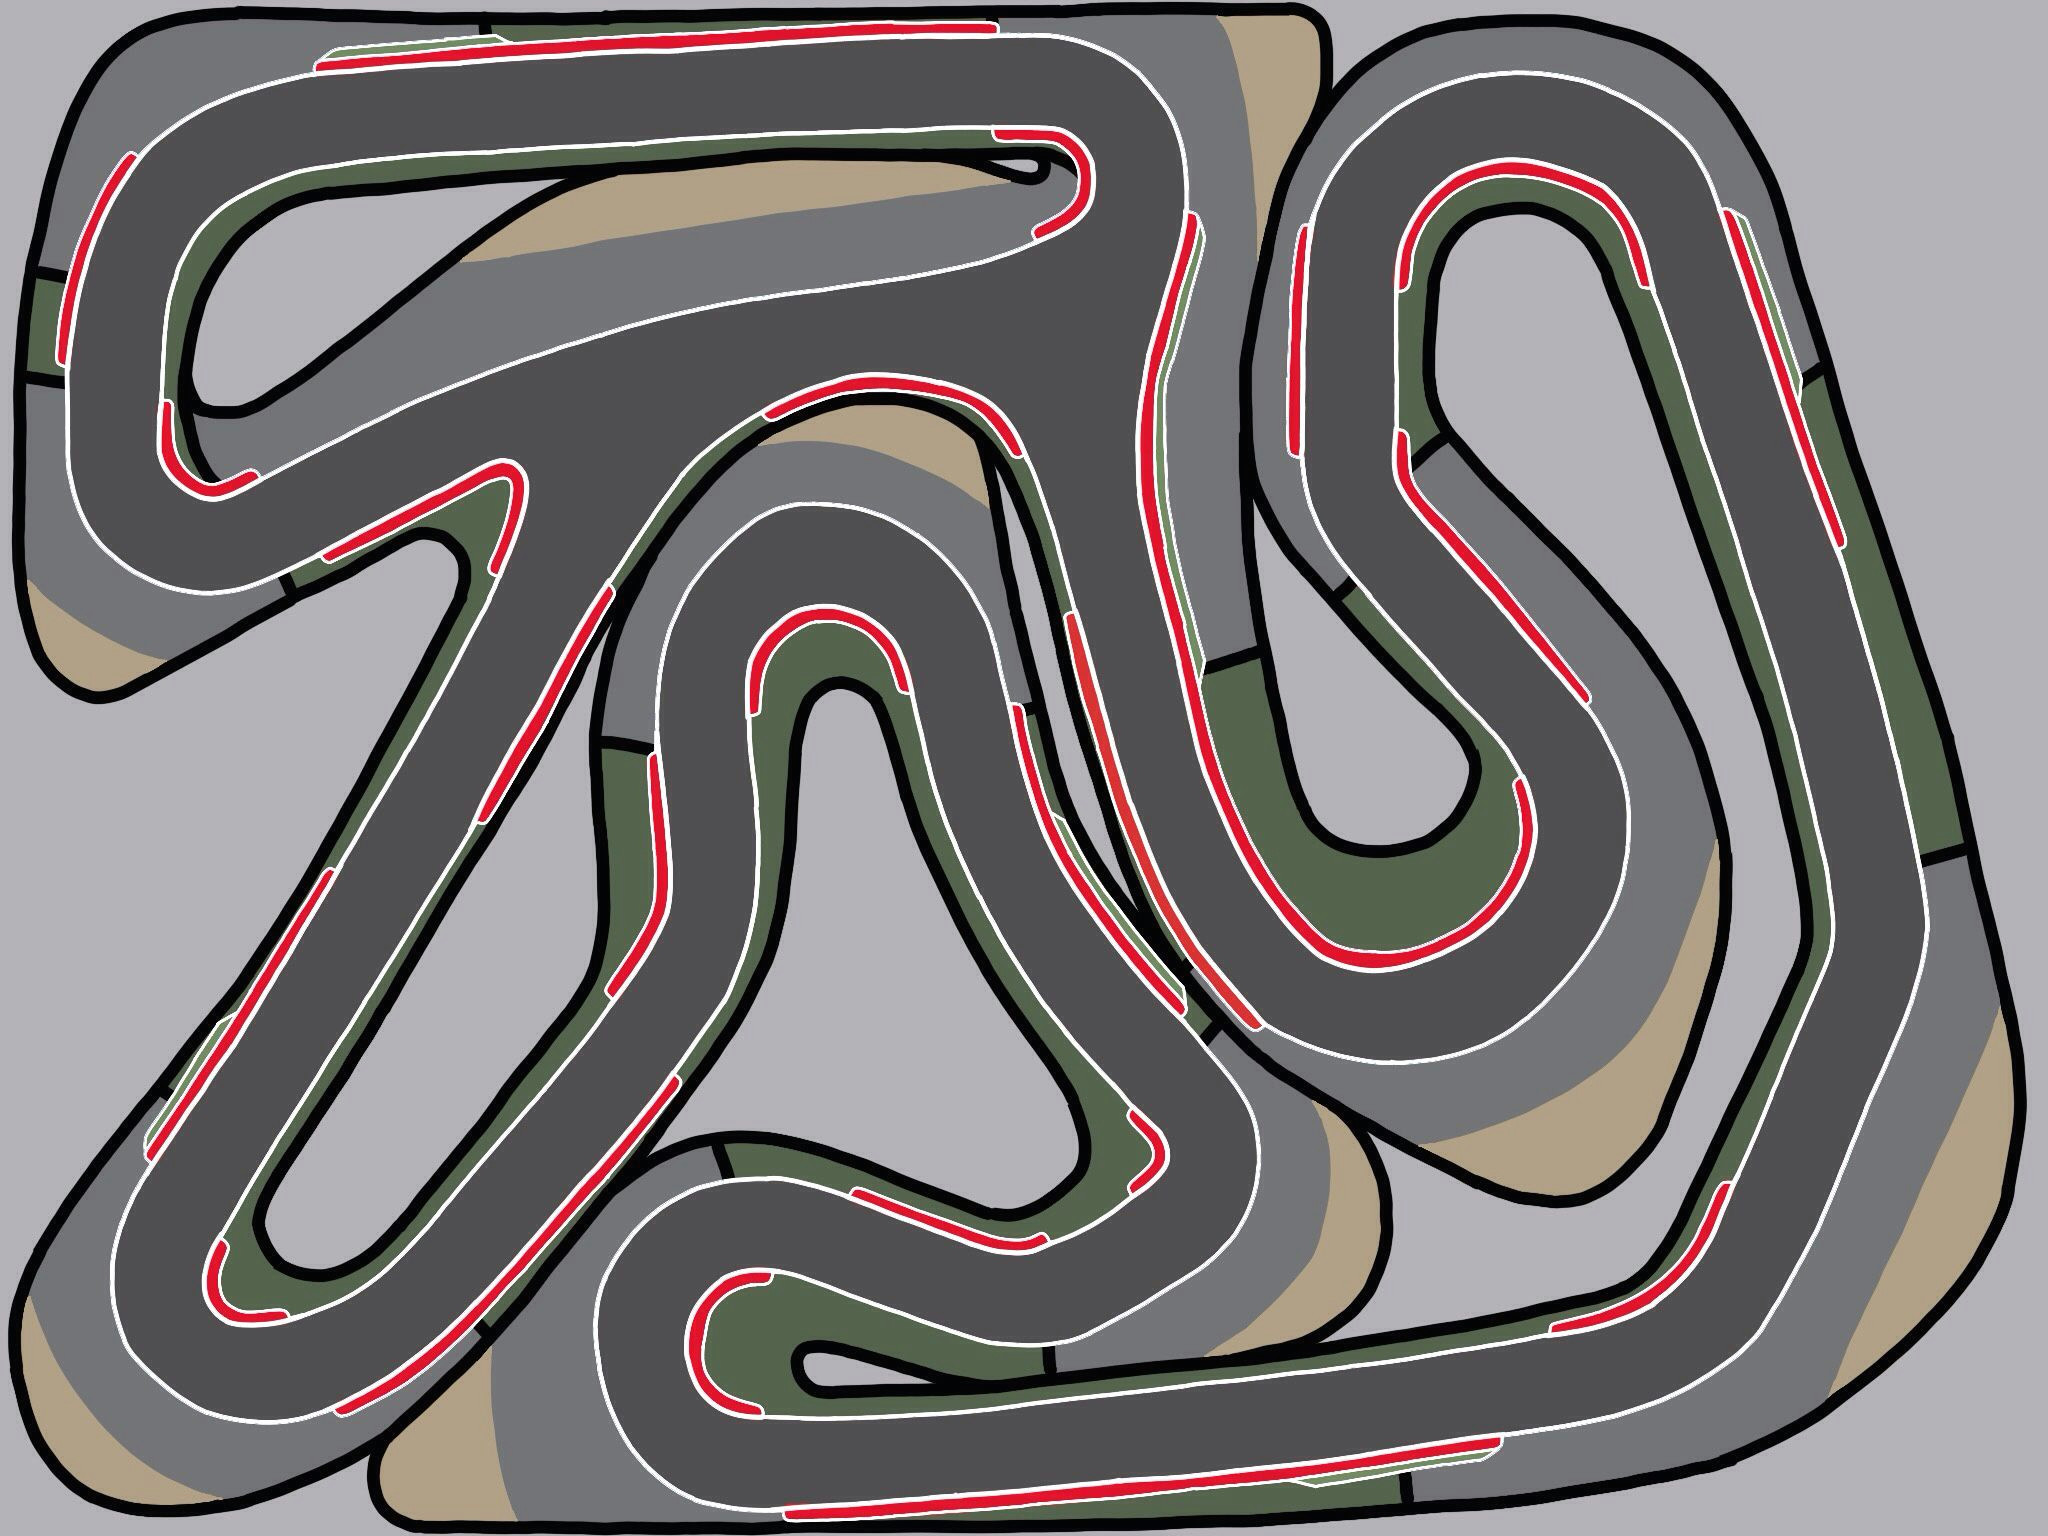 Drawing An Eye Reddit Go Kart Circuit Design Racetrackdesigns